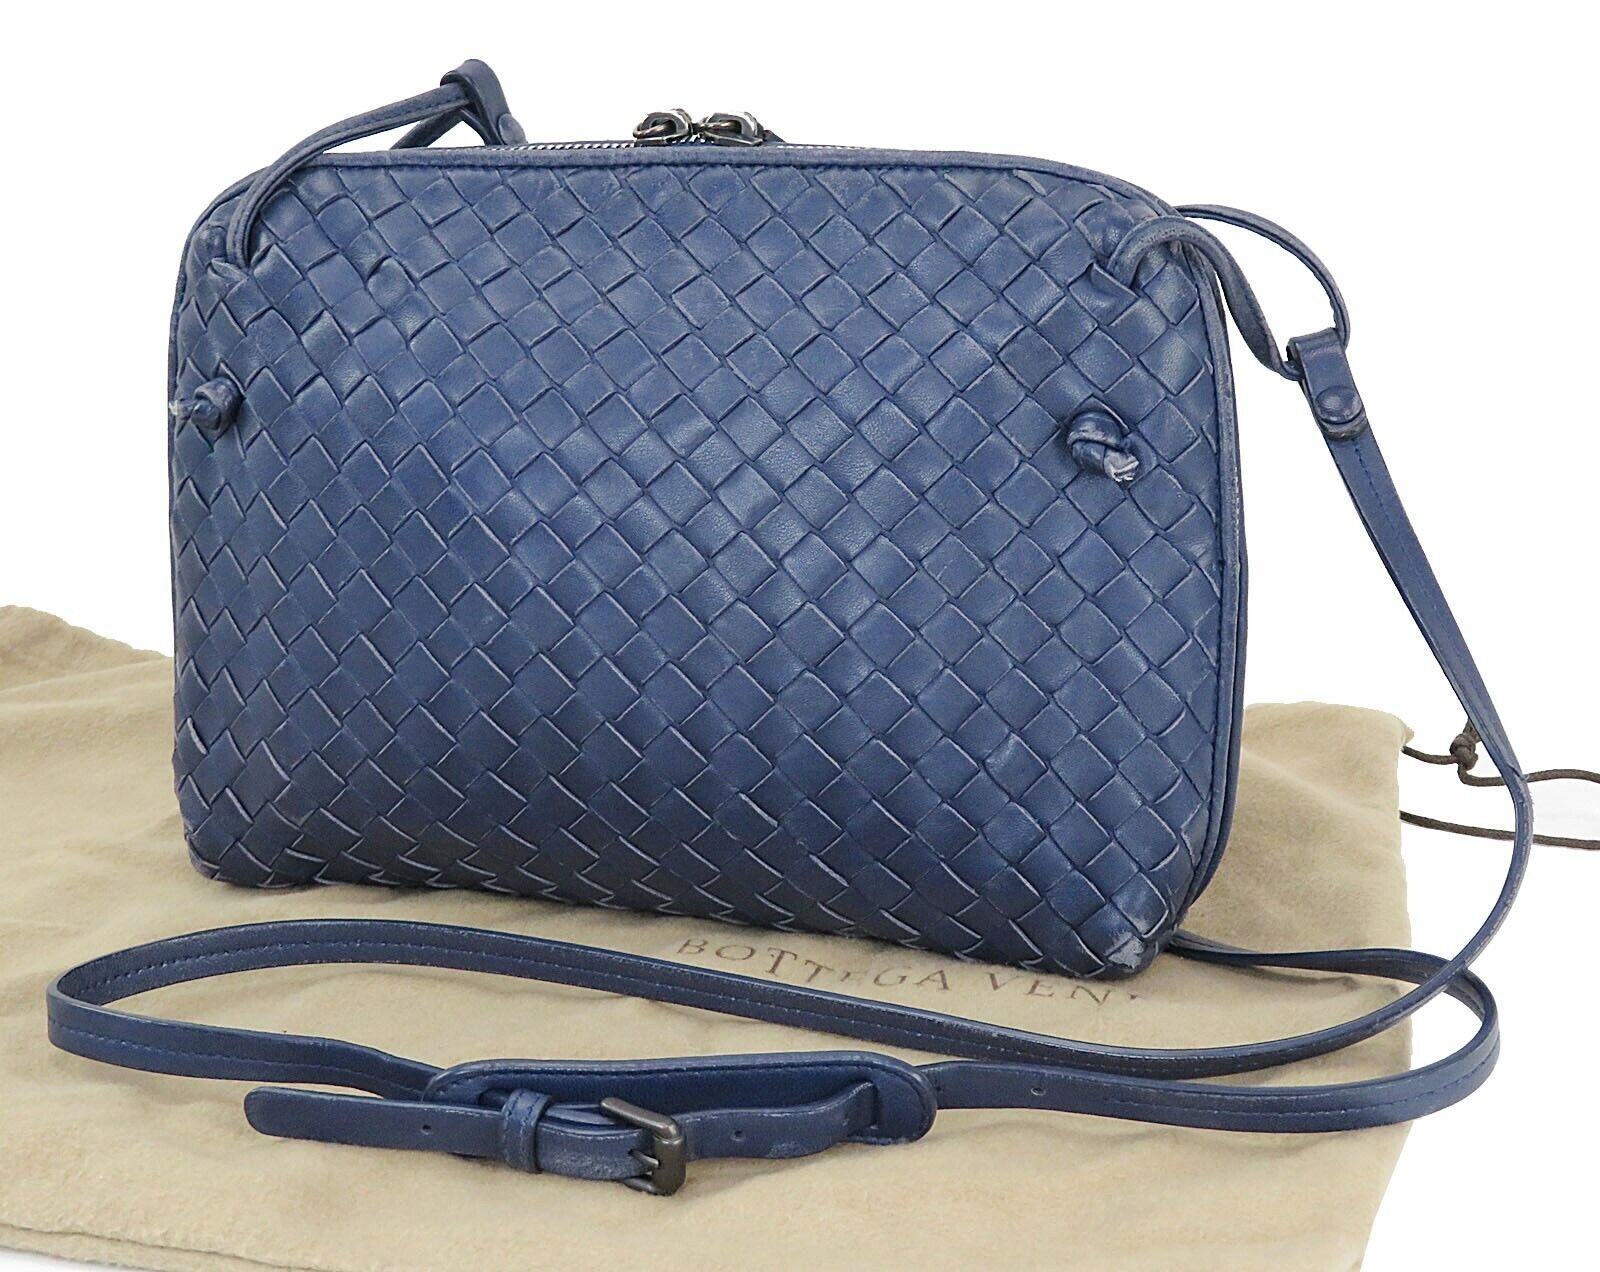 Authentic BOTTEGA VENETA Navy Blue Woven Leather Crossbody Bag Purse #42240